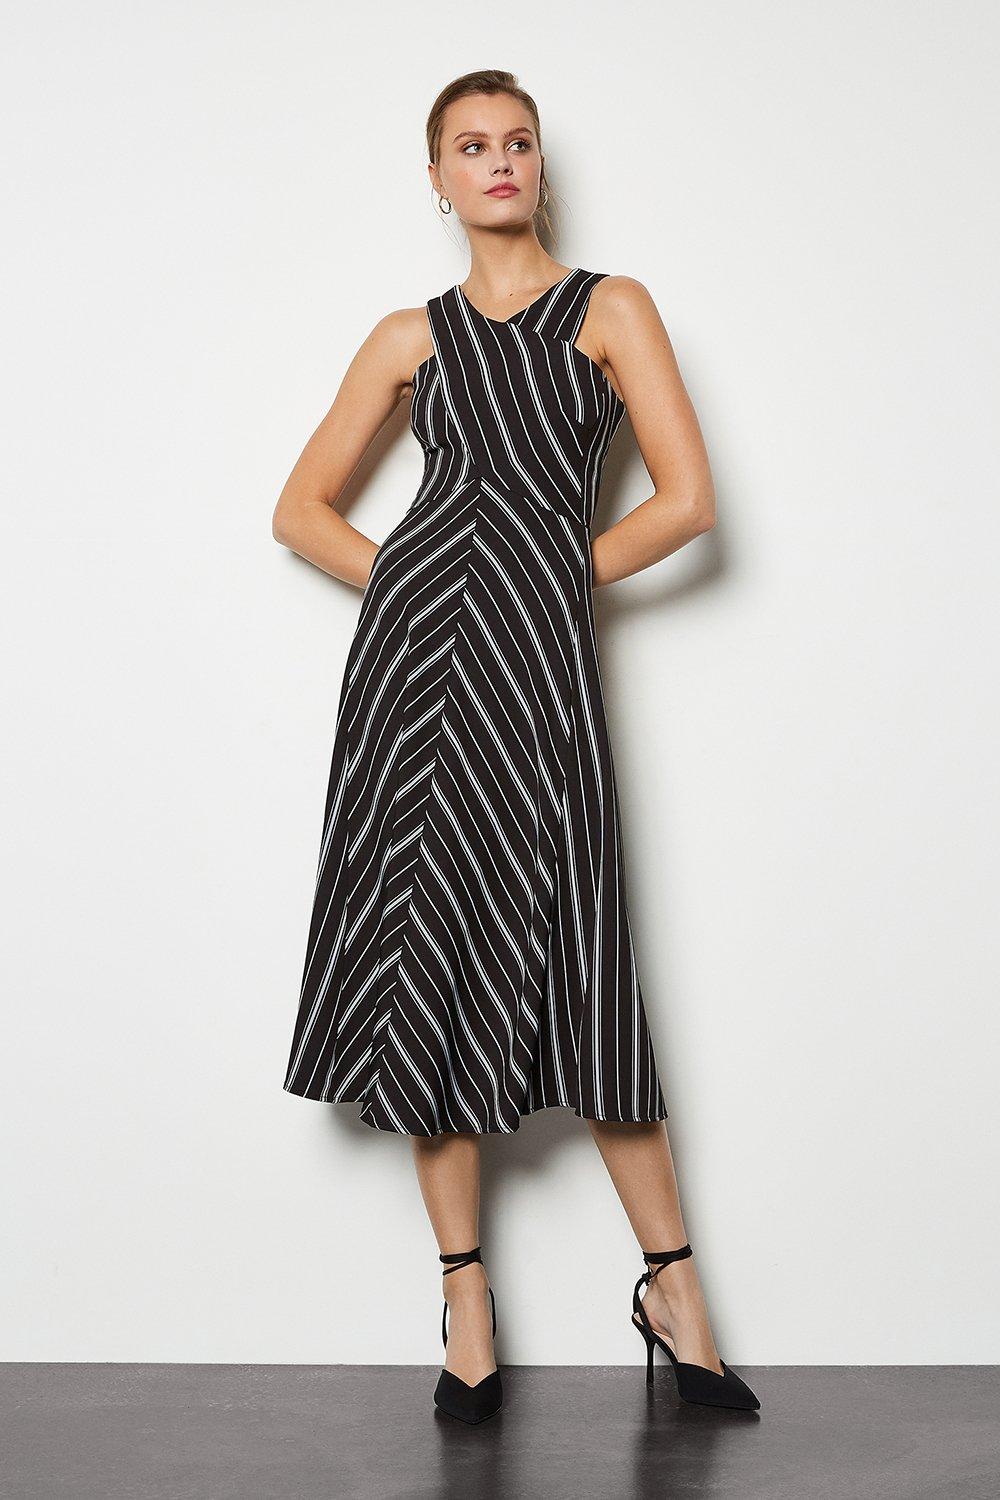 karen millen black white striped dress